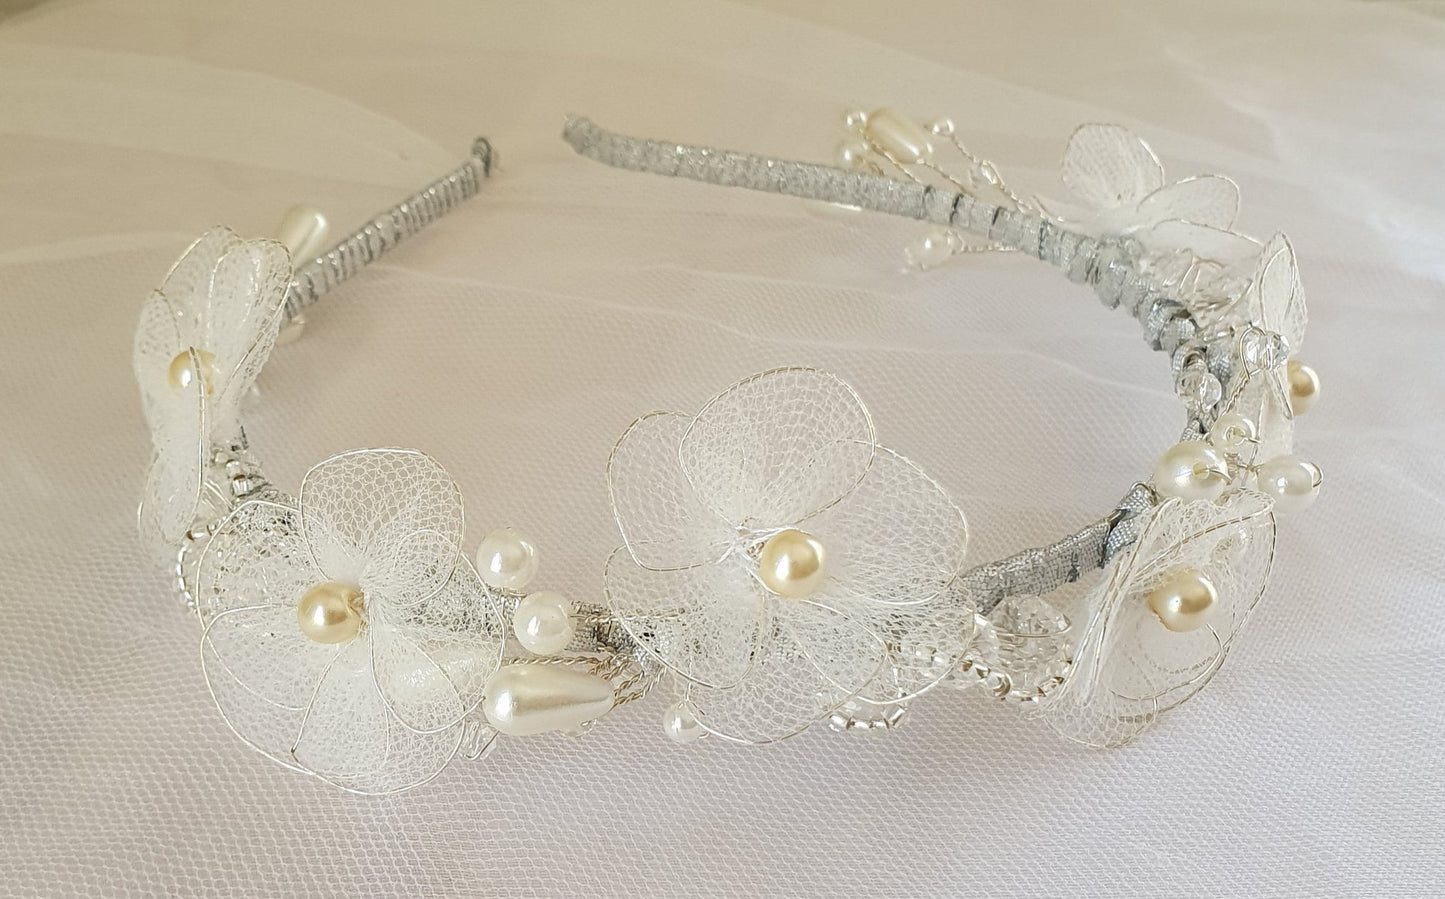 Bridal tiara with tulle and pearls wedding tiara- Handmade tiara bridal wedding, headdress event tiara, hair accessories